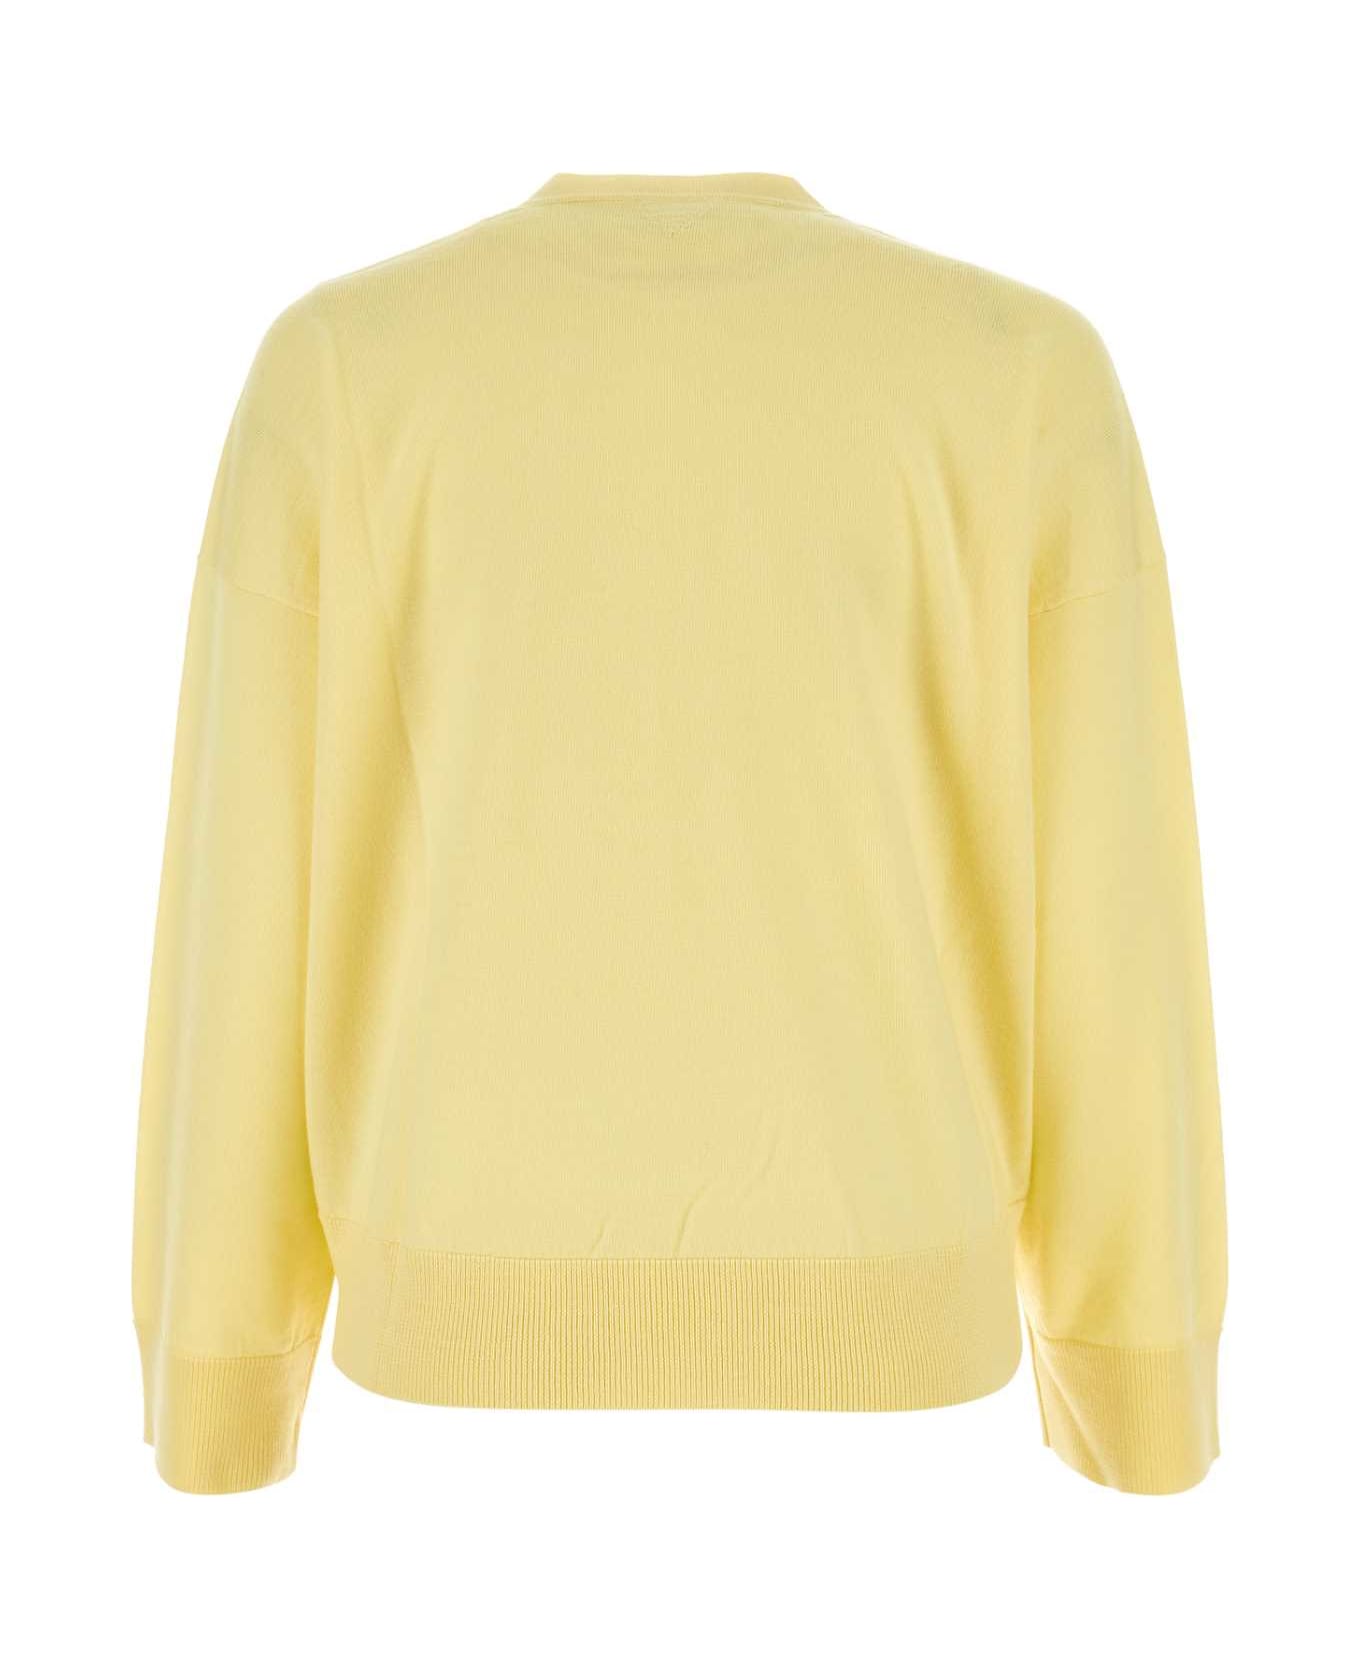 Bottega Veneta Yellow Wool Oversize Sweater - GIALLO